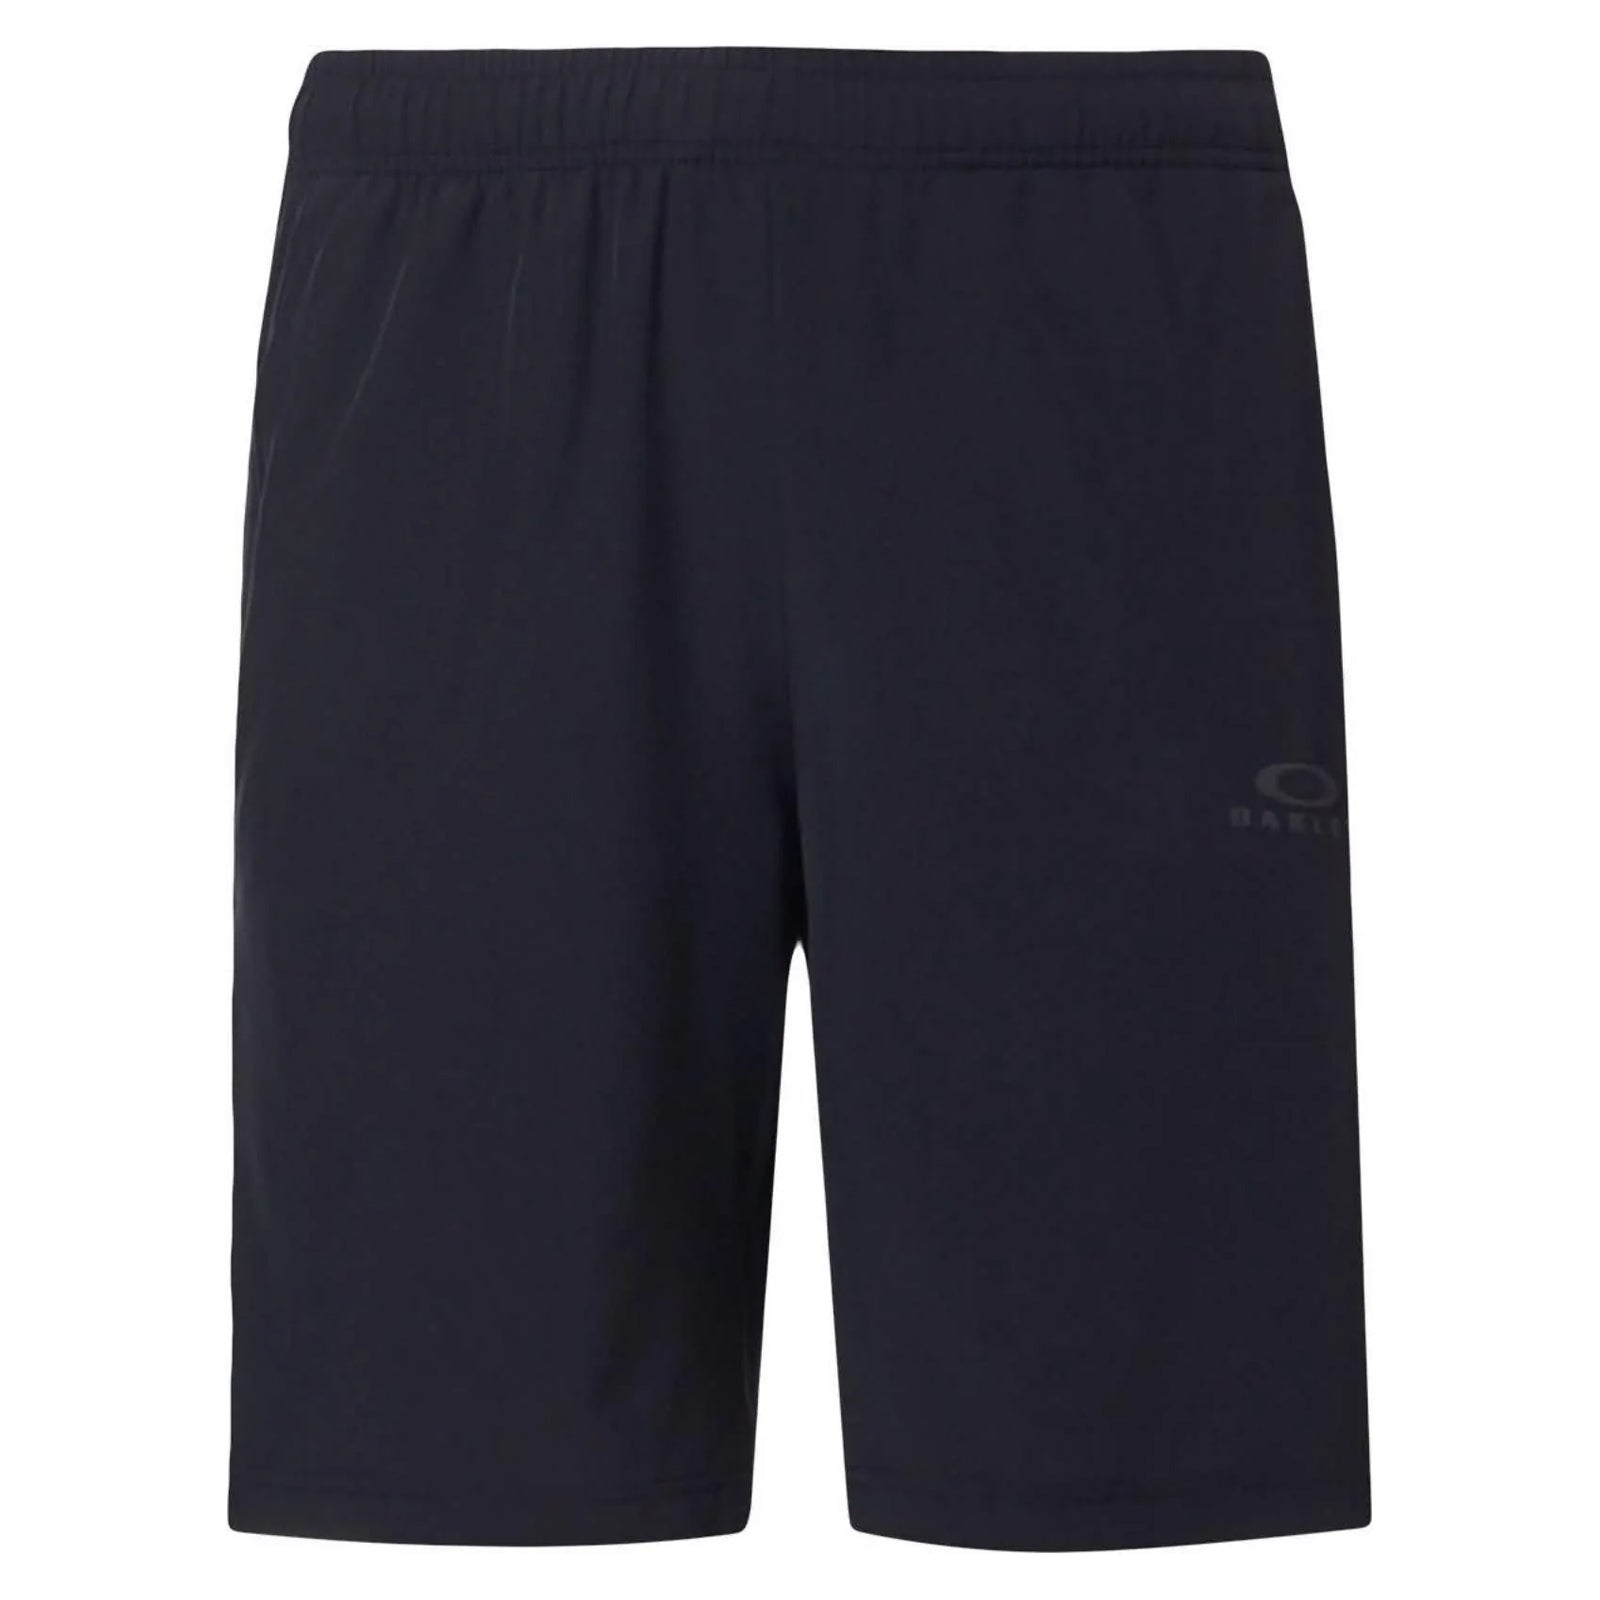 Oakley Foundational 9 2.0 Men's Shorts